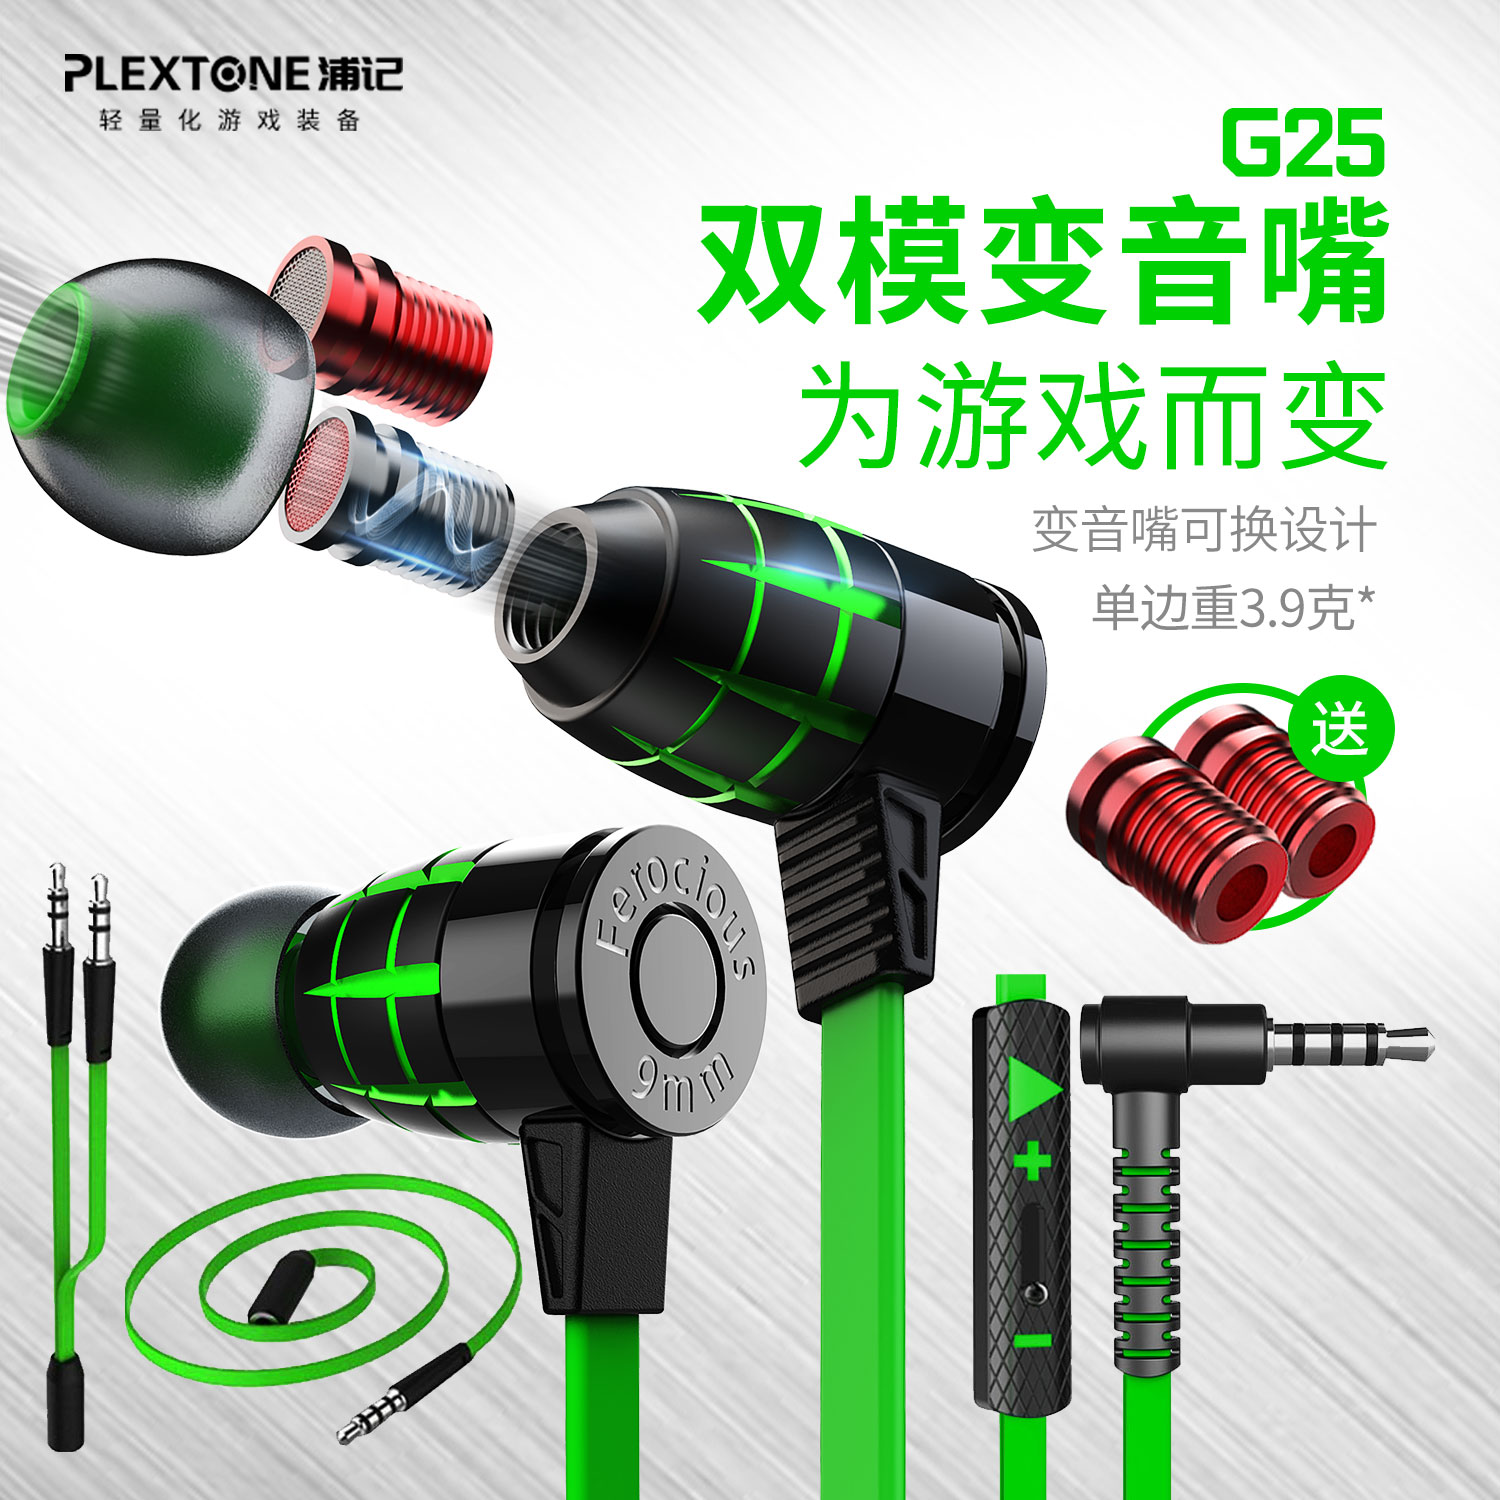 Plextone g25 gaming earphone